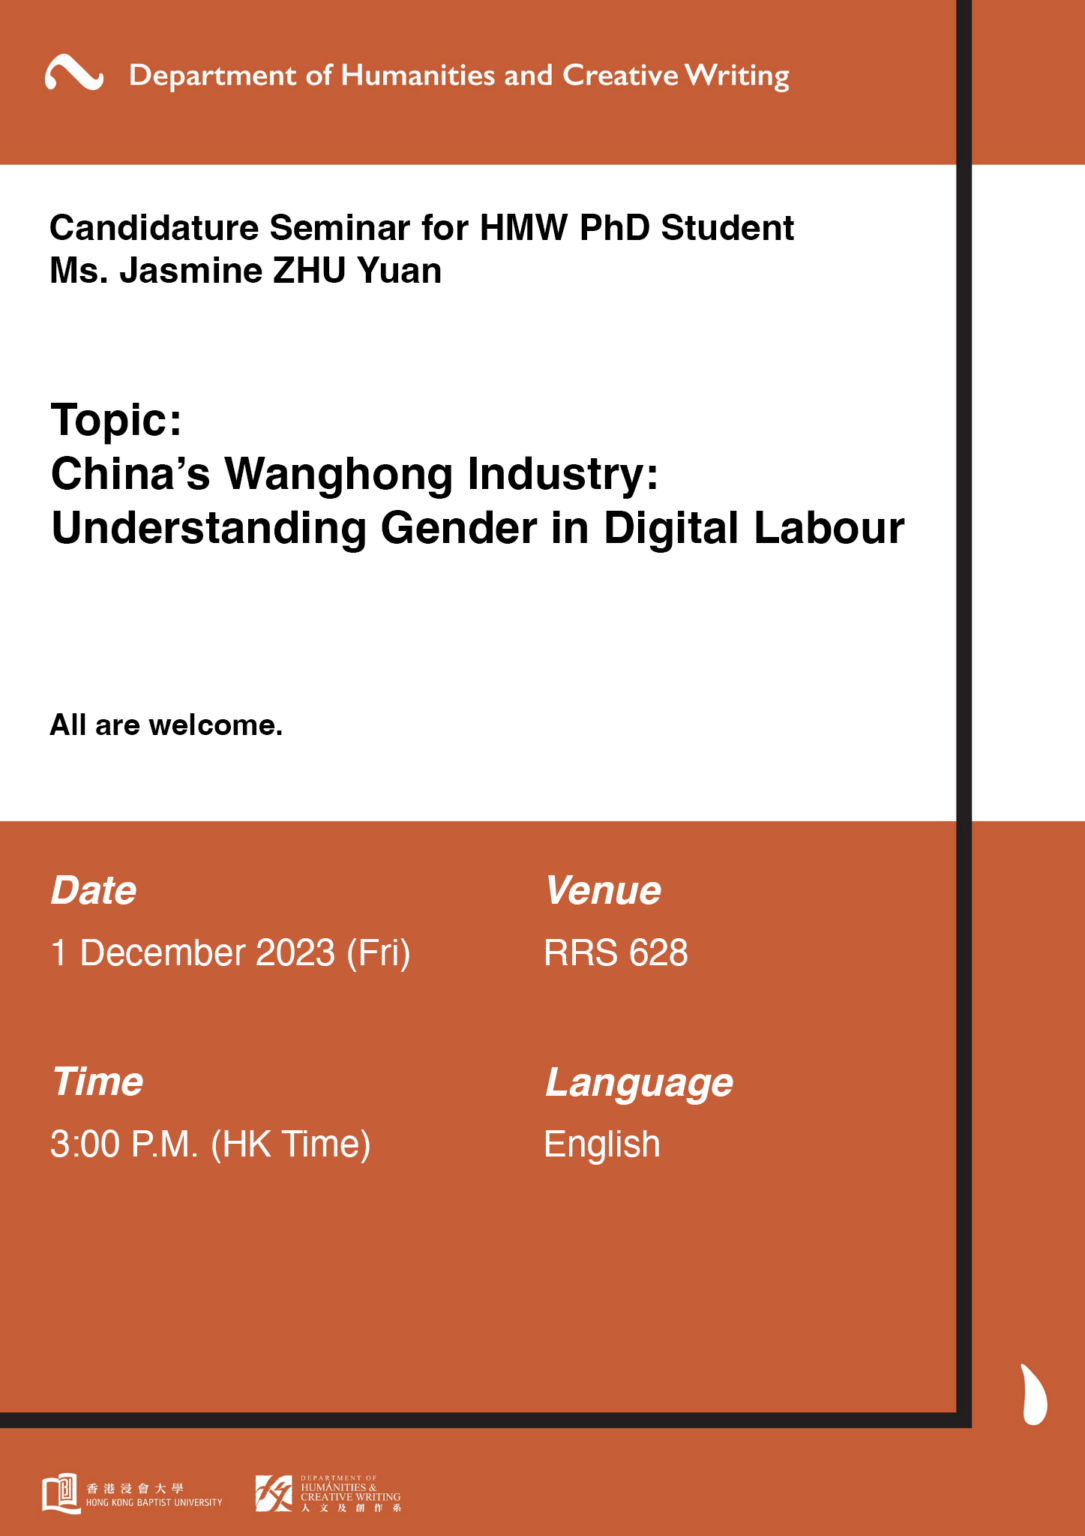 Candidature Seminar for HMW PhD student Ms. Jasmine ZHU Yuan